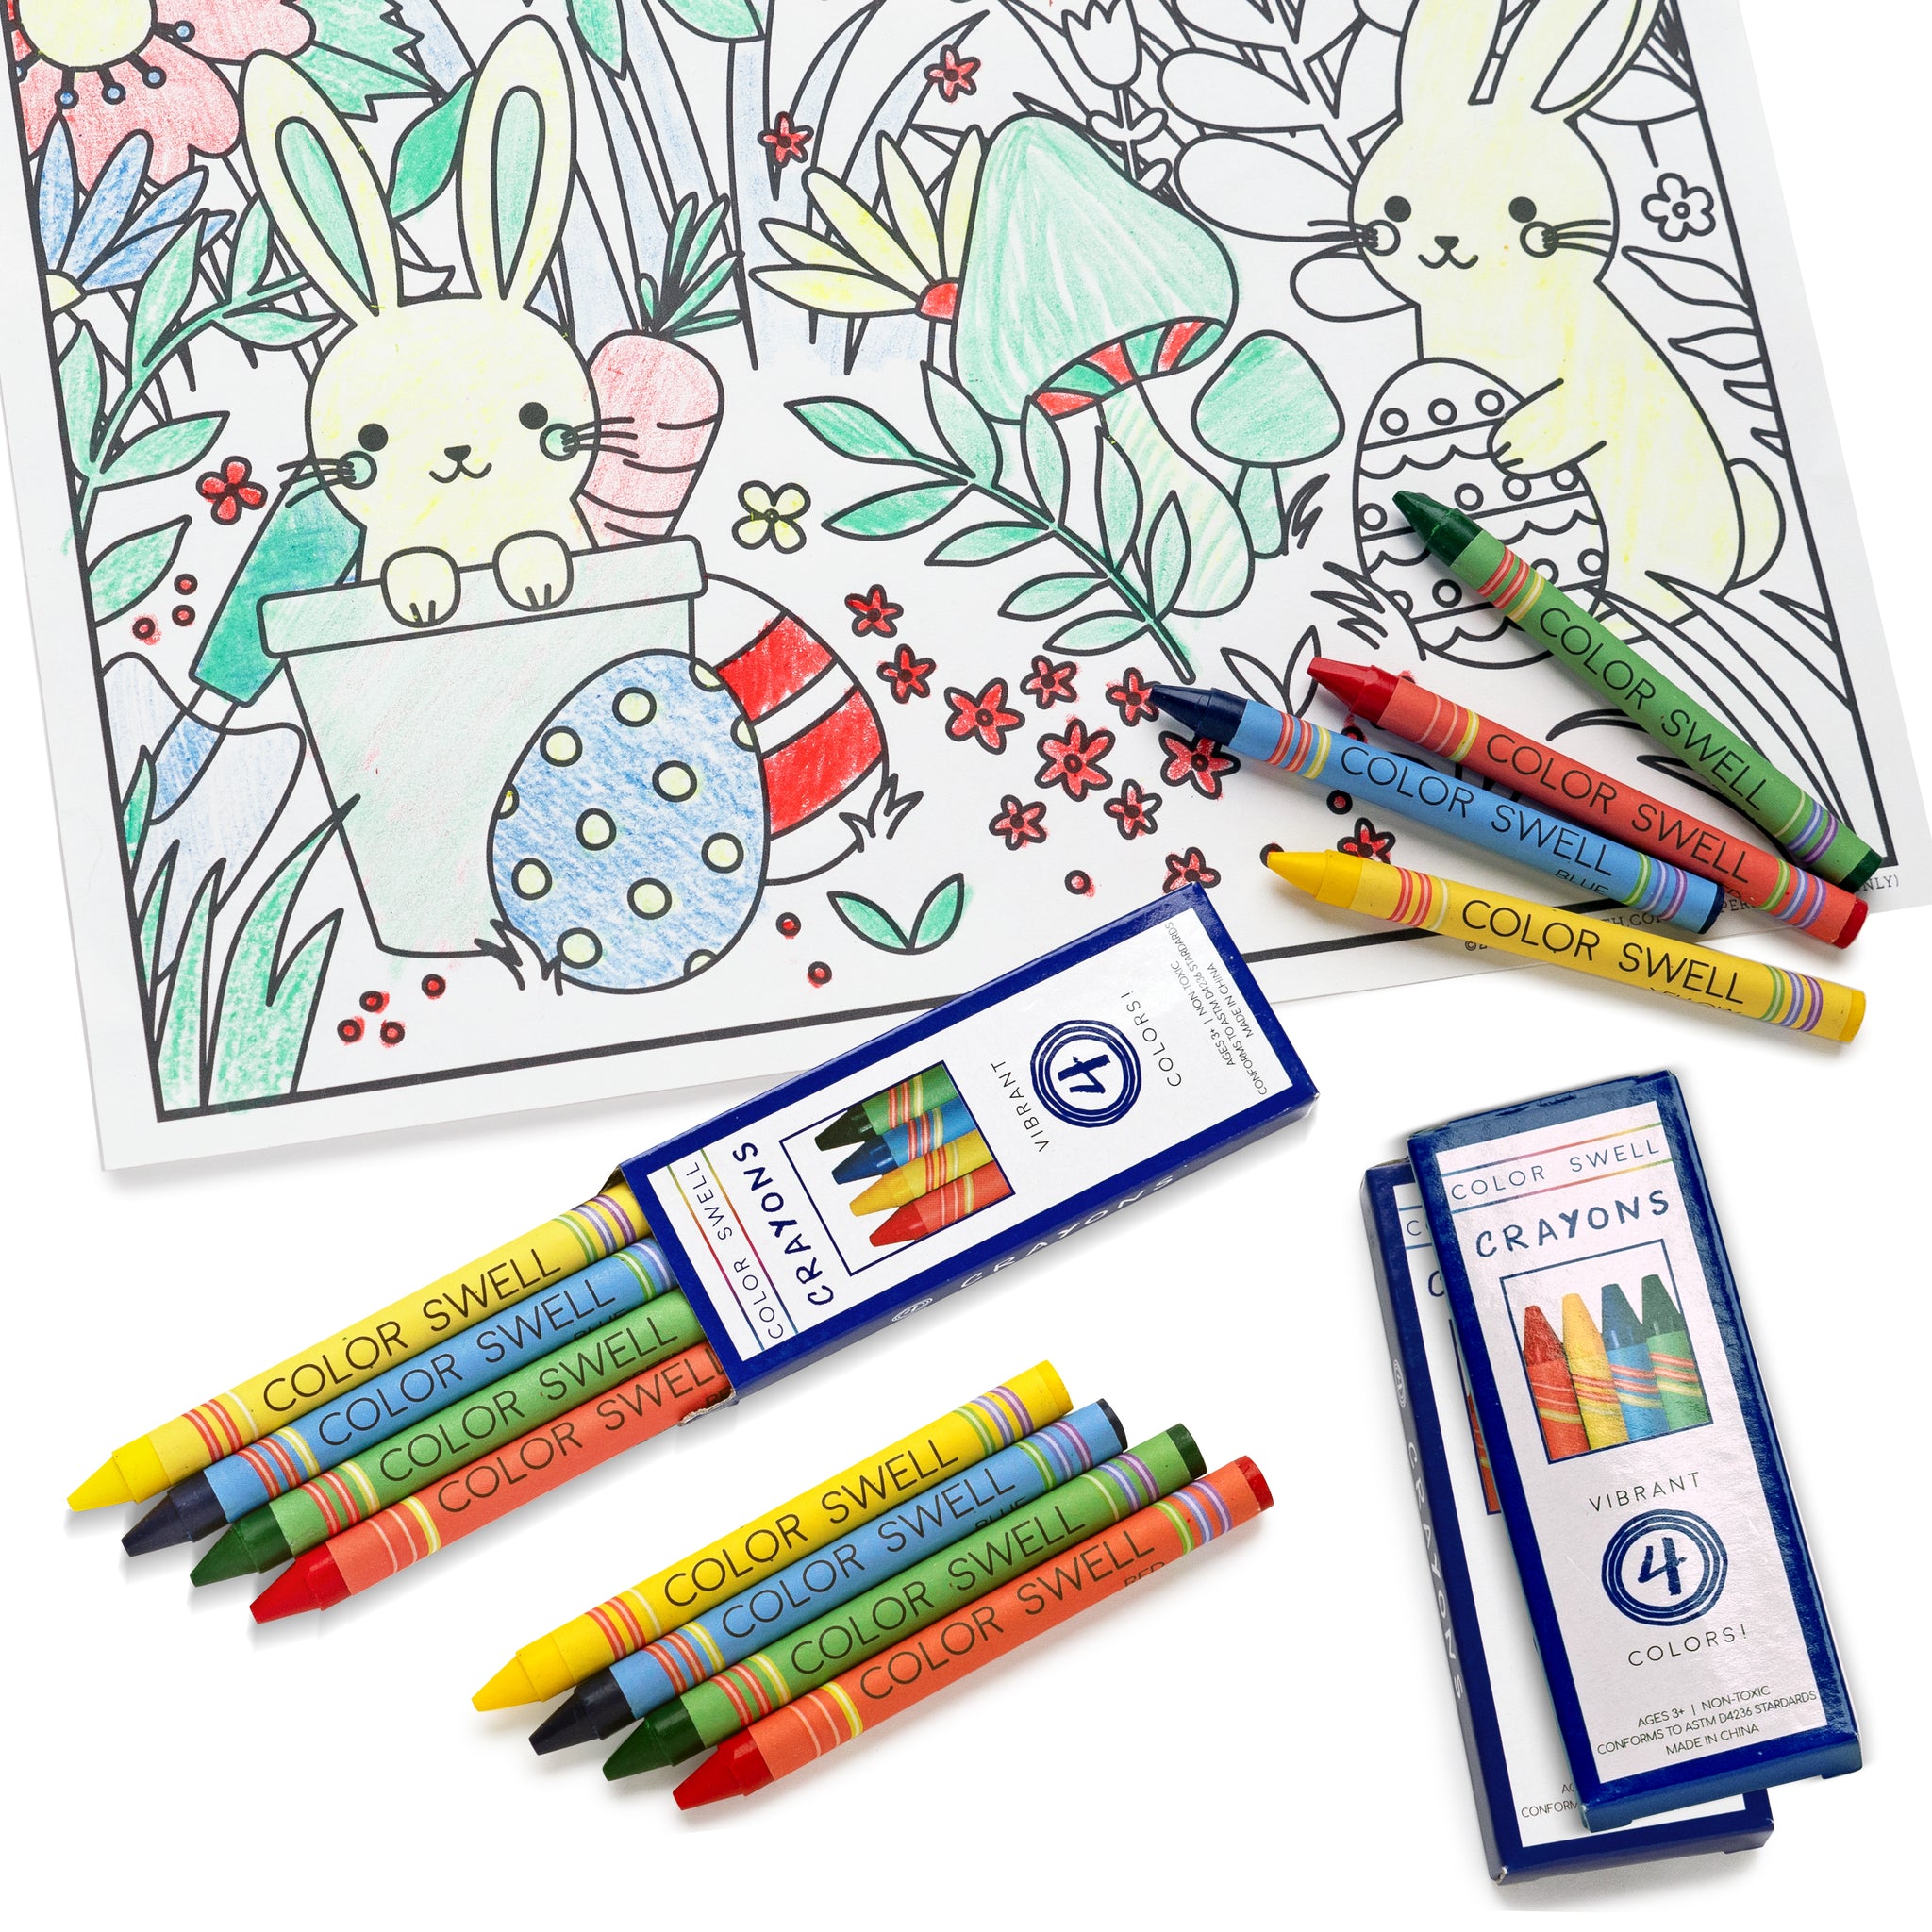 Color Swell Bulk Crayon Restaurant Packs - 300 Packs of 4 Crayons